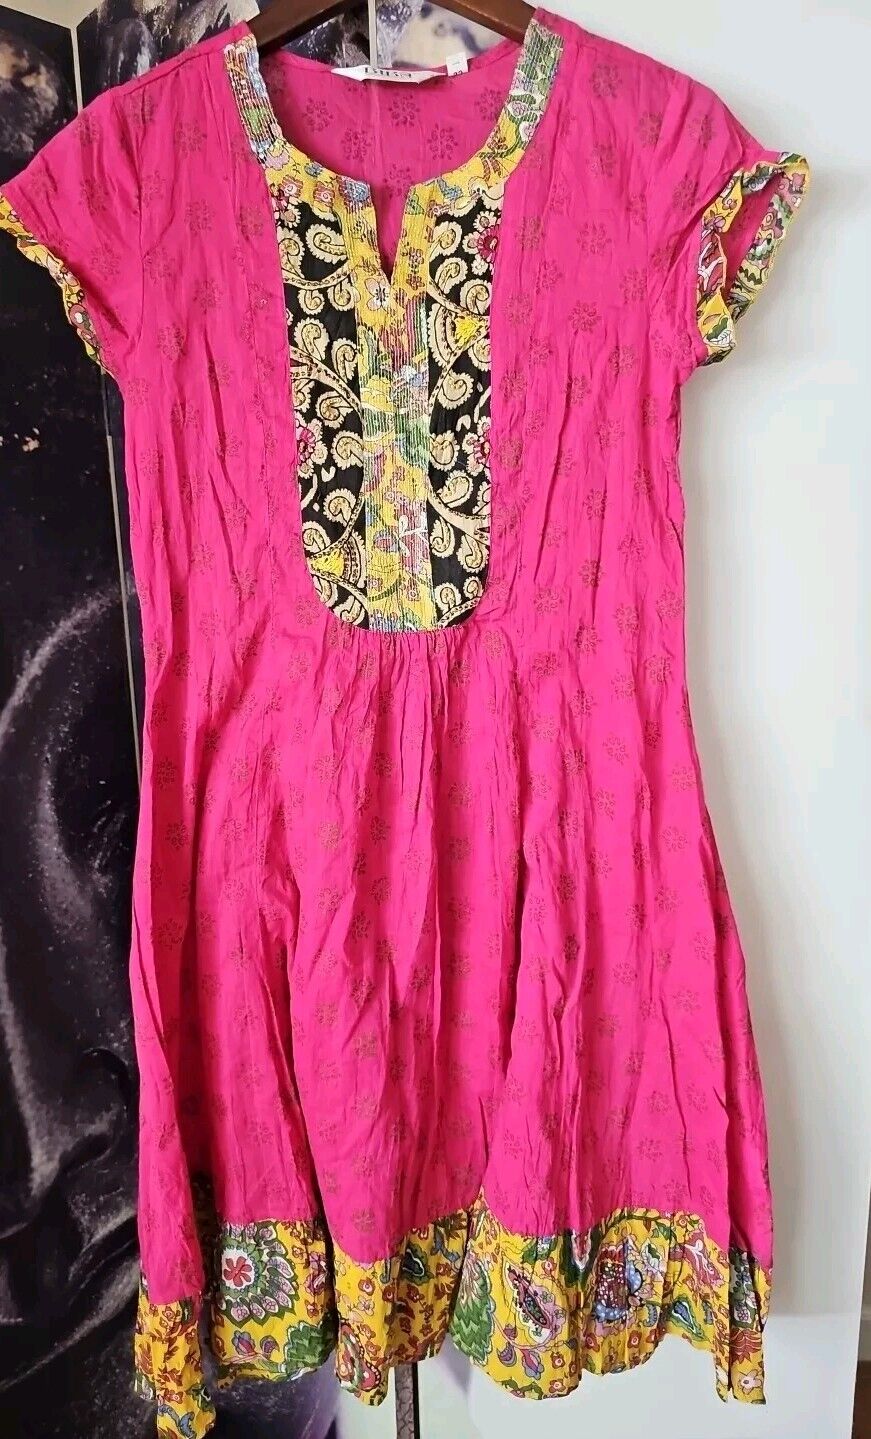 Biba Women\'s Dress Size 32 Pink Gold Floral Trim Short Sleeves Tunic Dress